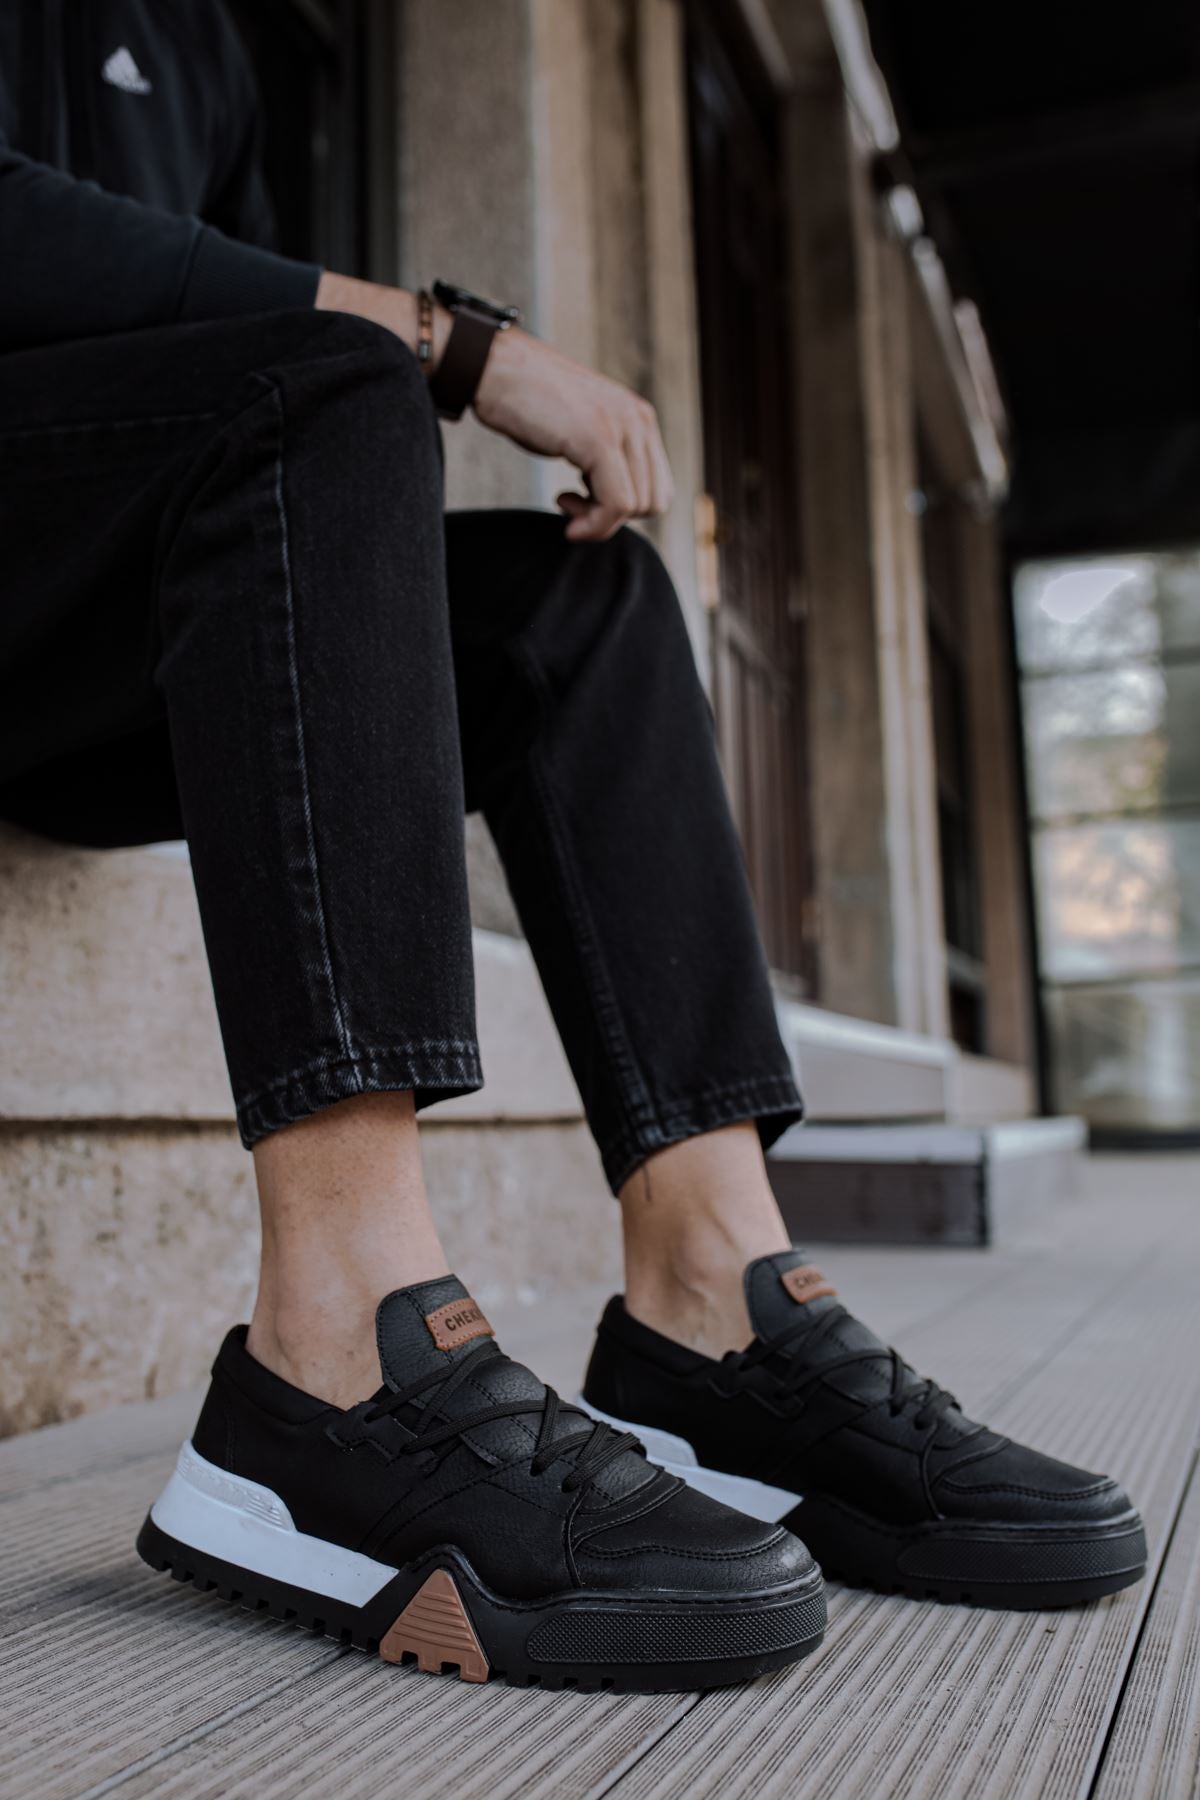 CH067 SBT Men's Sneaker Shoes BLACK / BLACK - STREETMODE ™